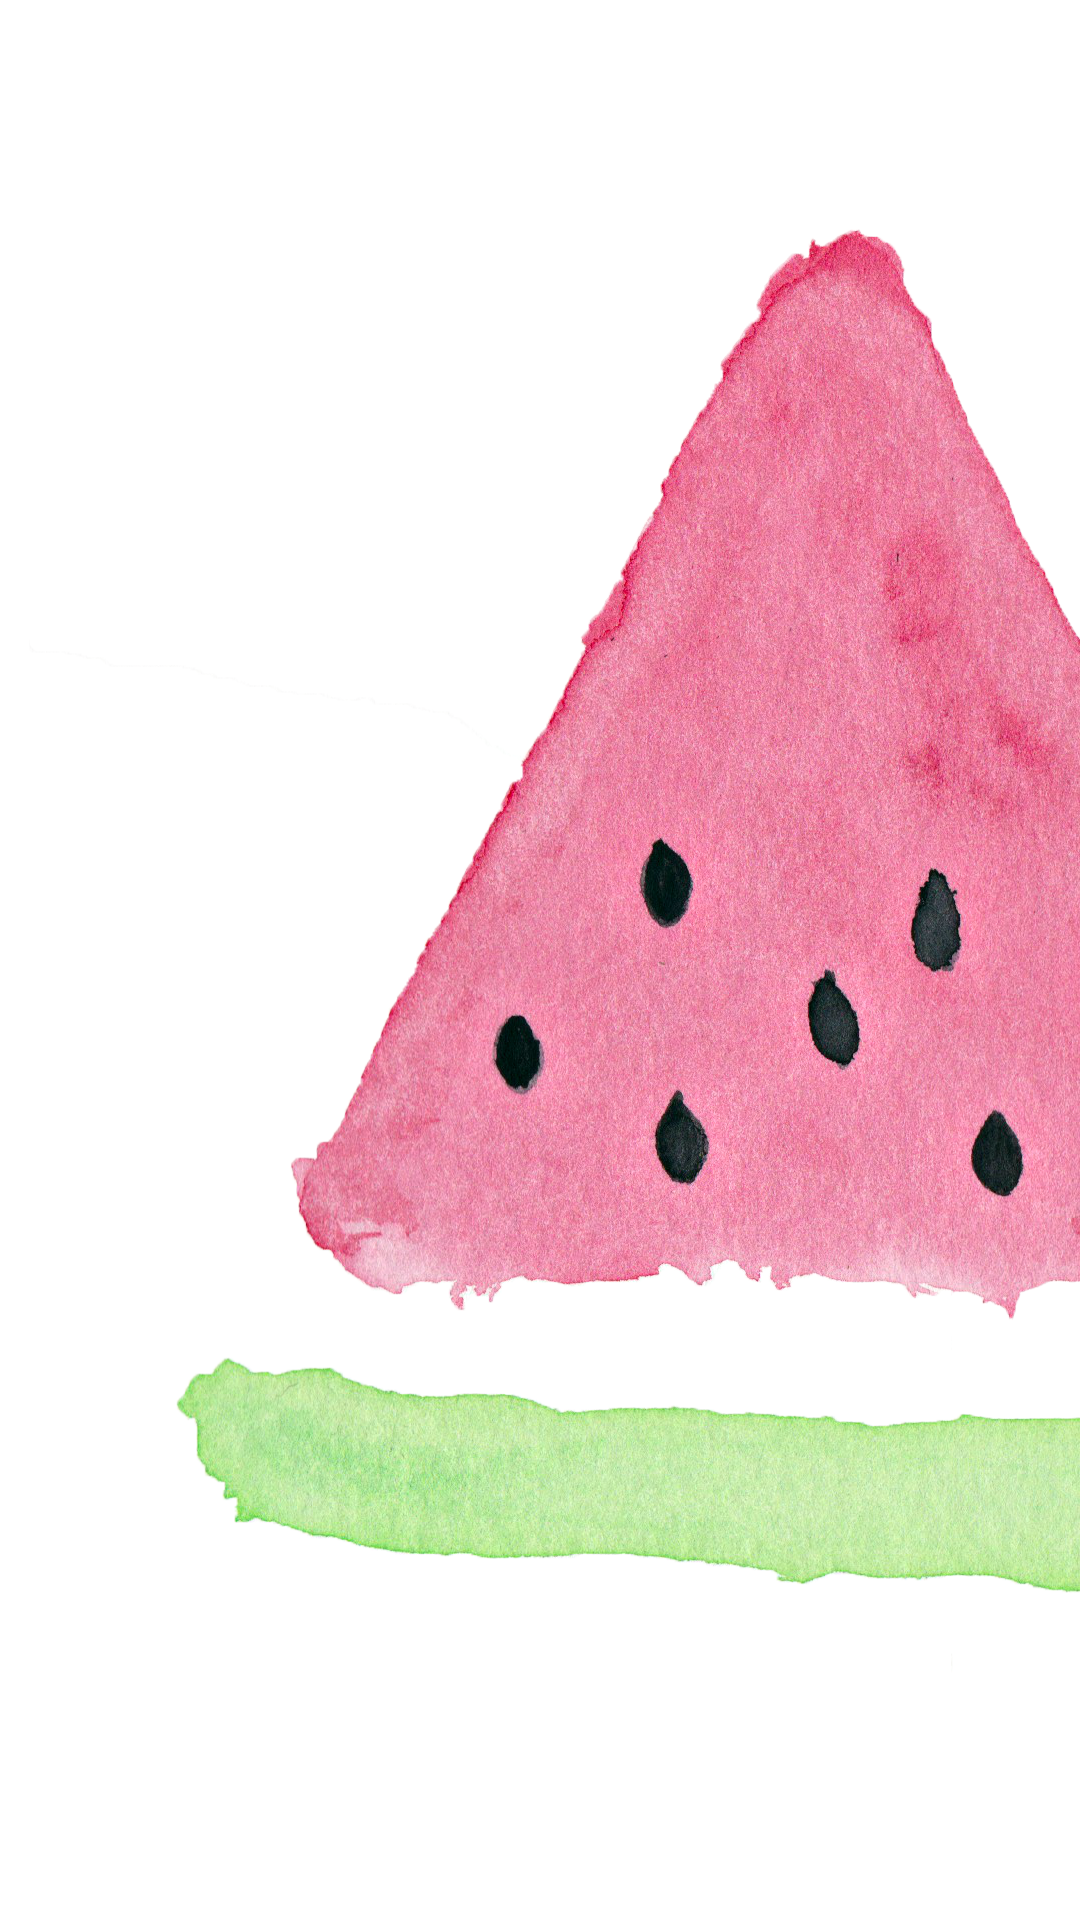 Drawn Watermelon Cute Summer Background iPhone